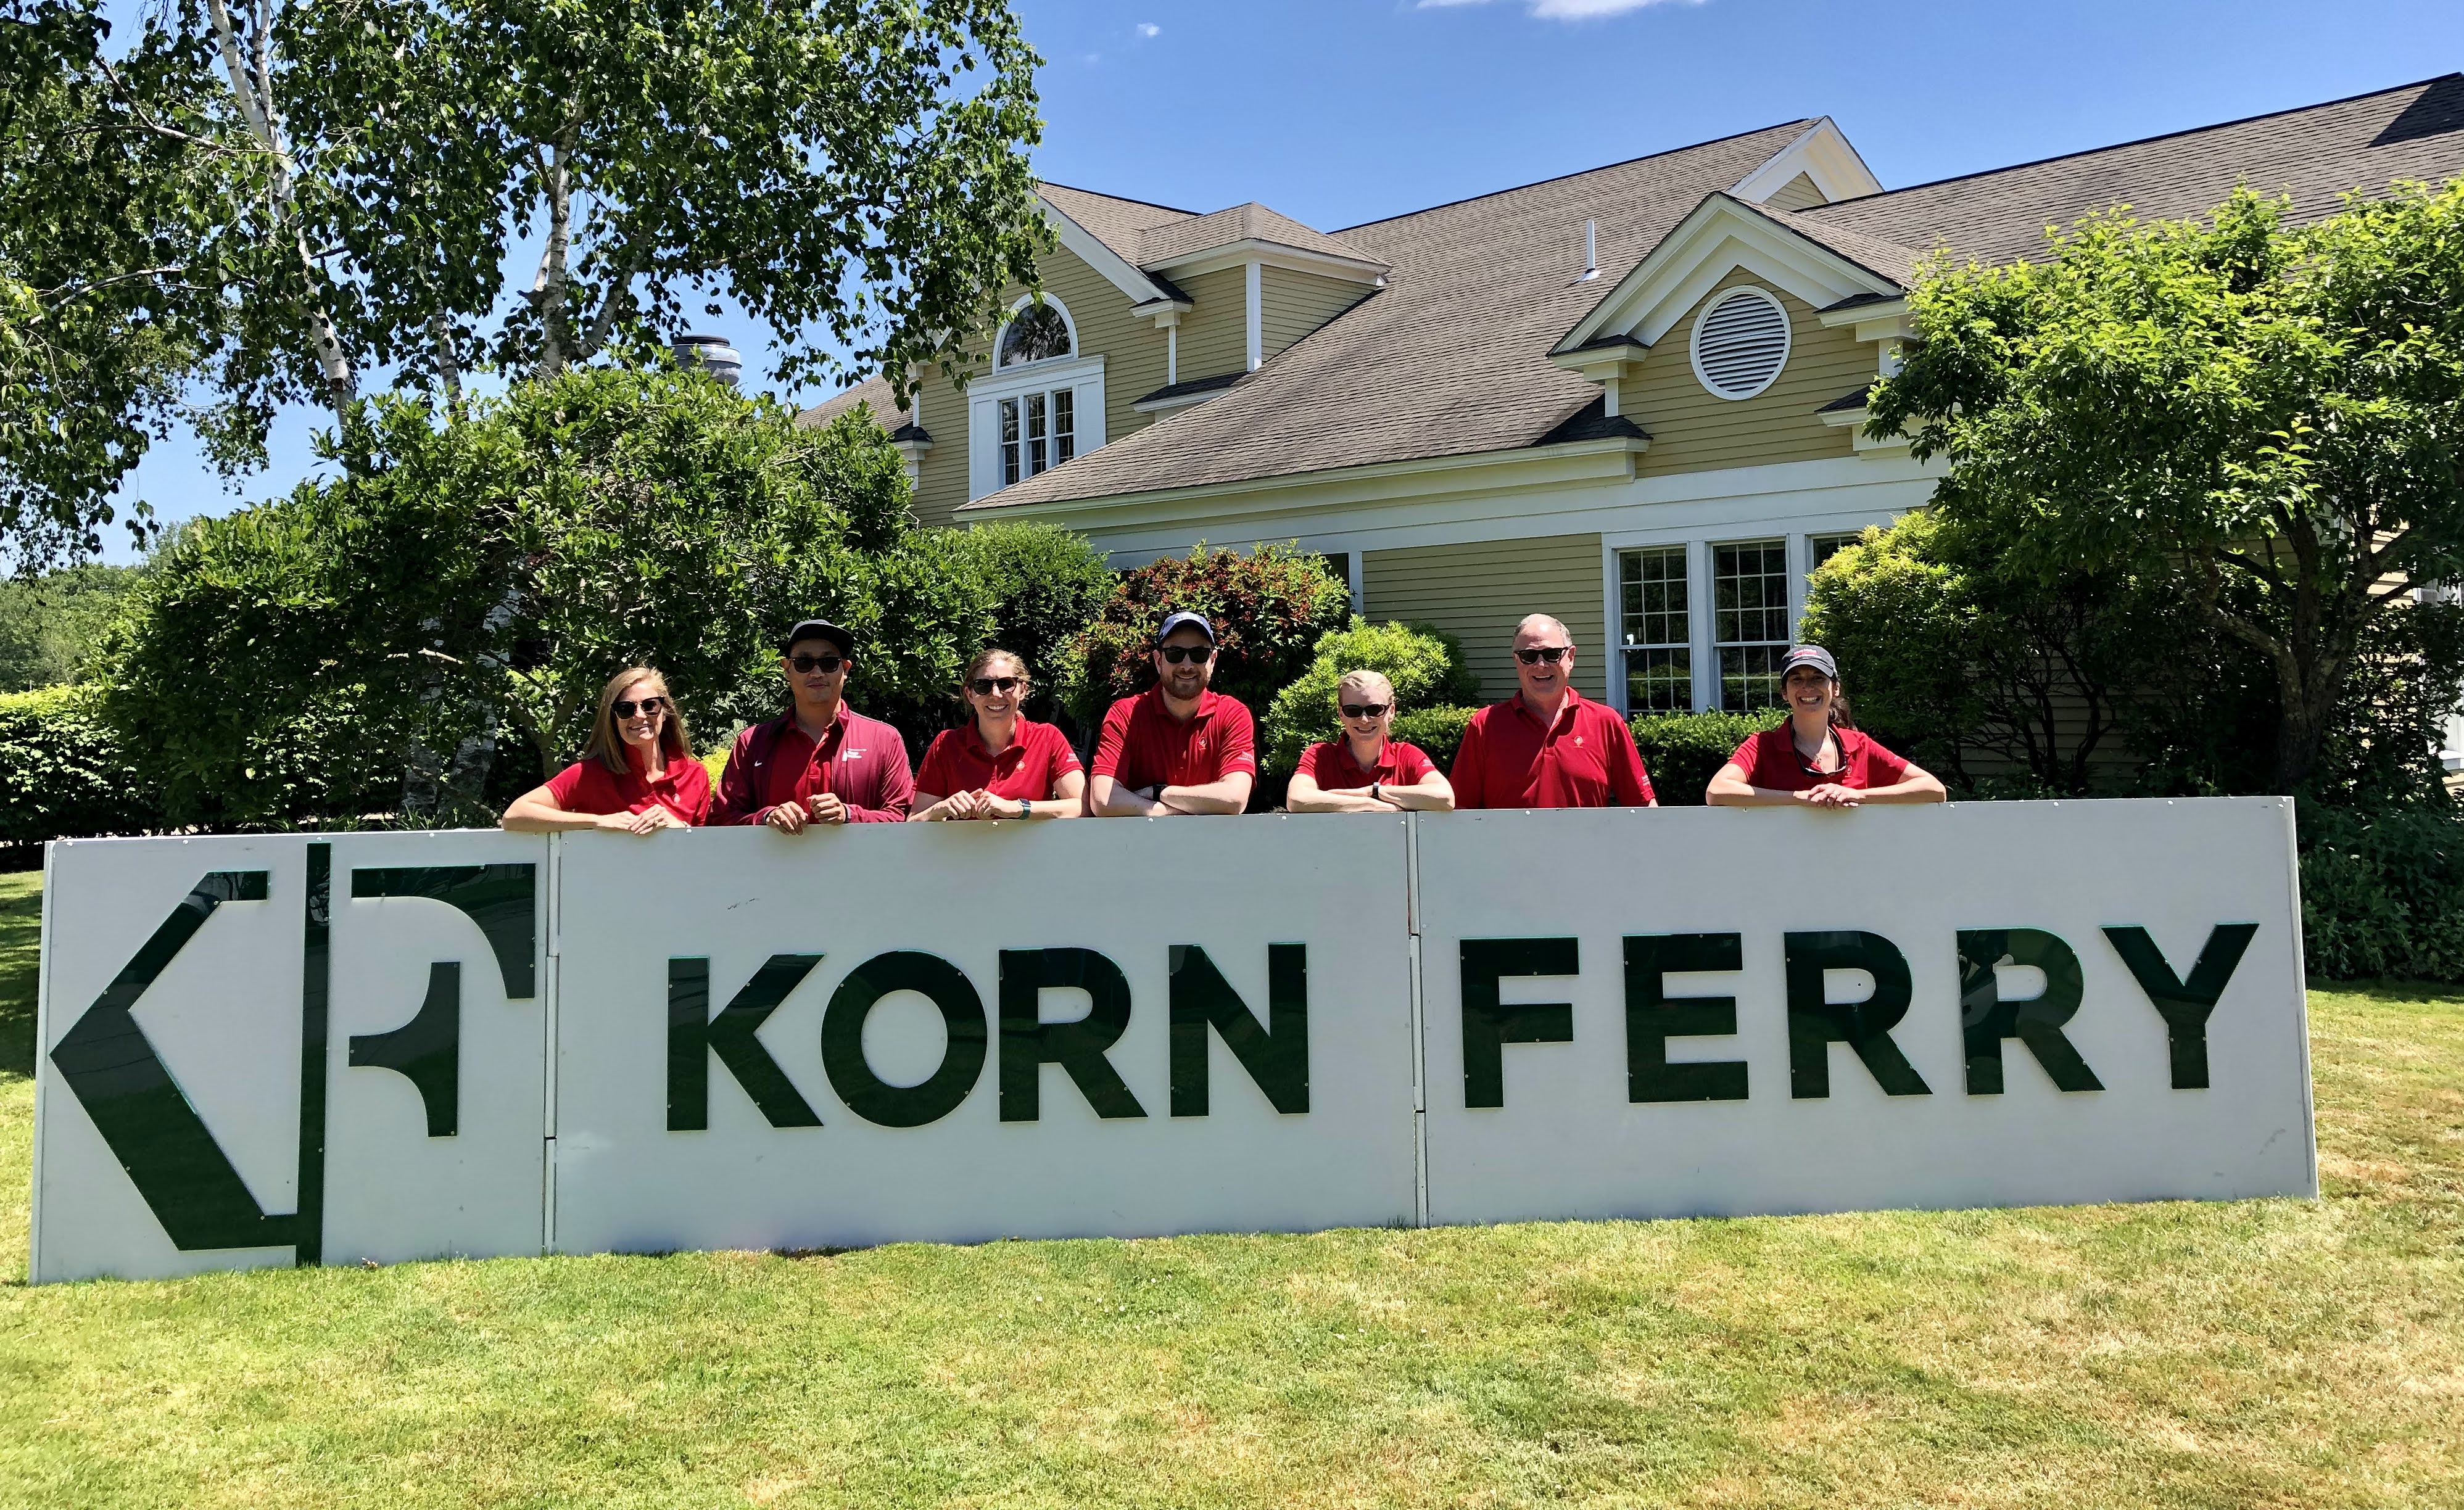 MMC Sports Medicine Fellows gathered around a sign that reads "Korn Ferry"